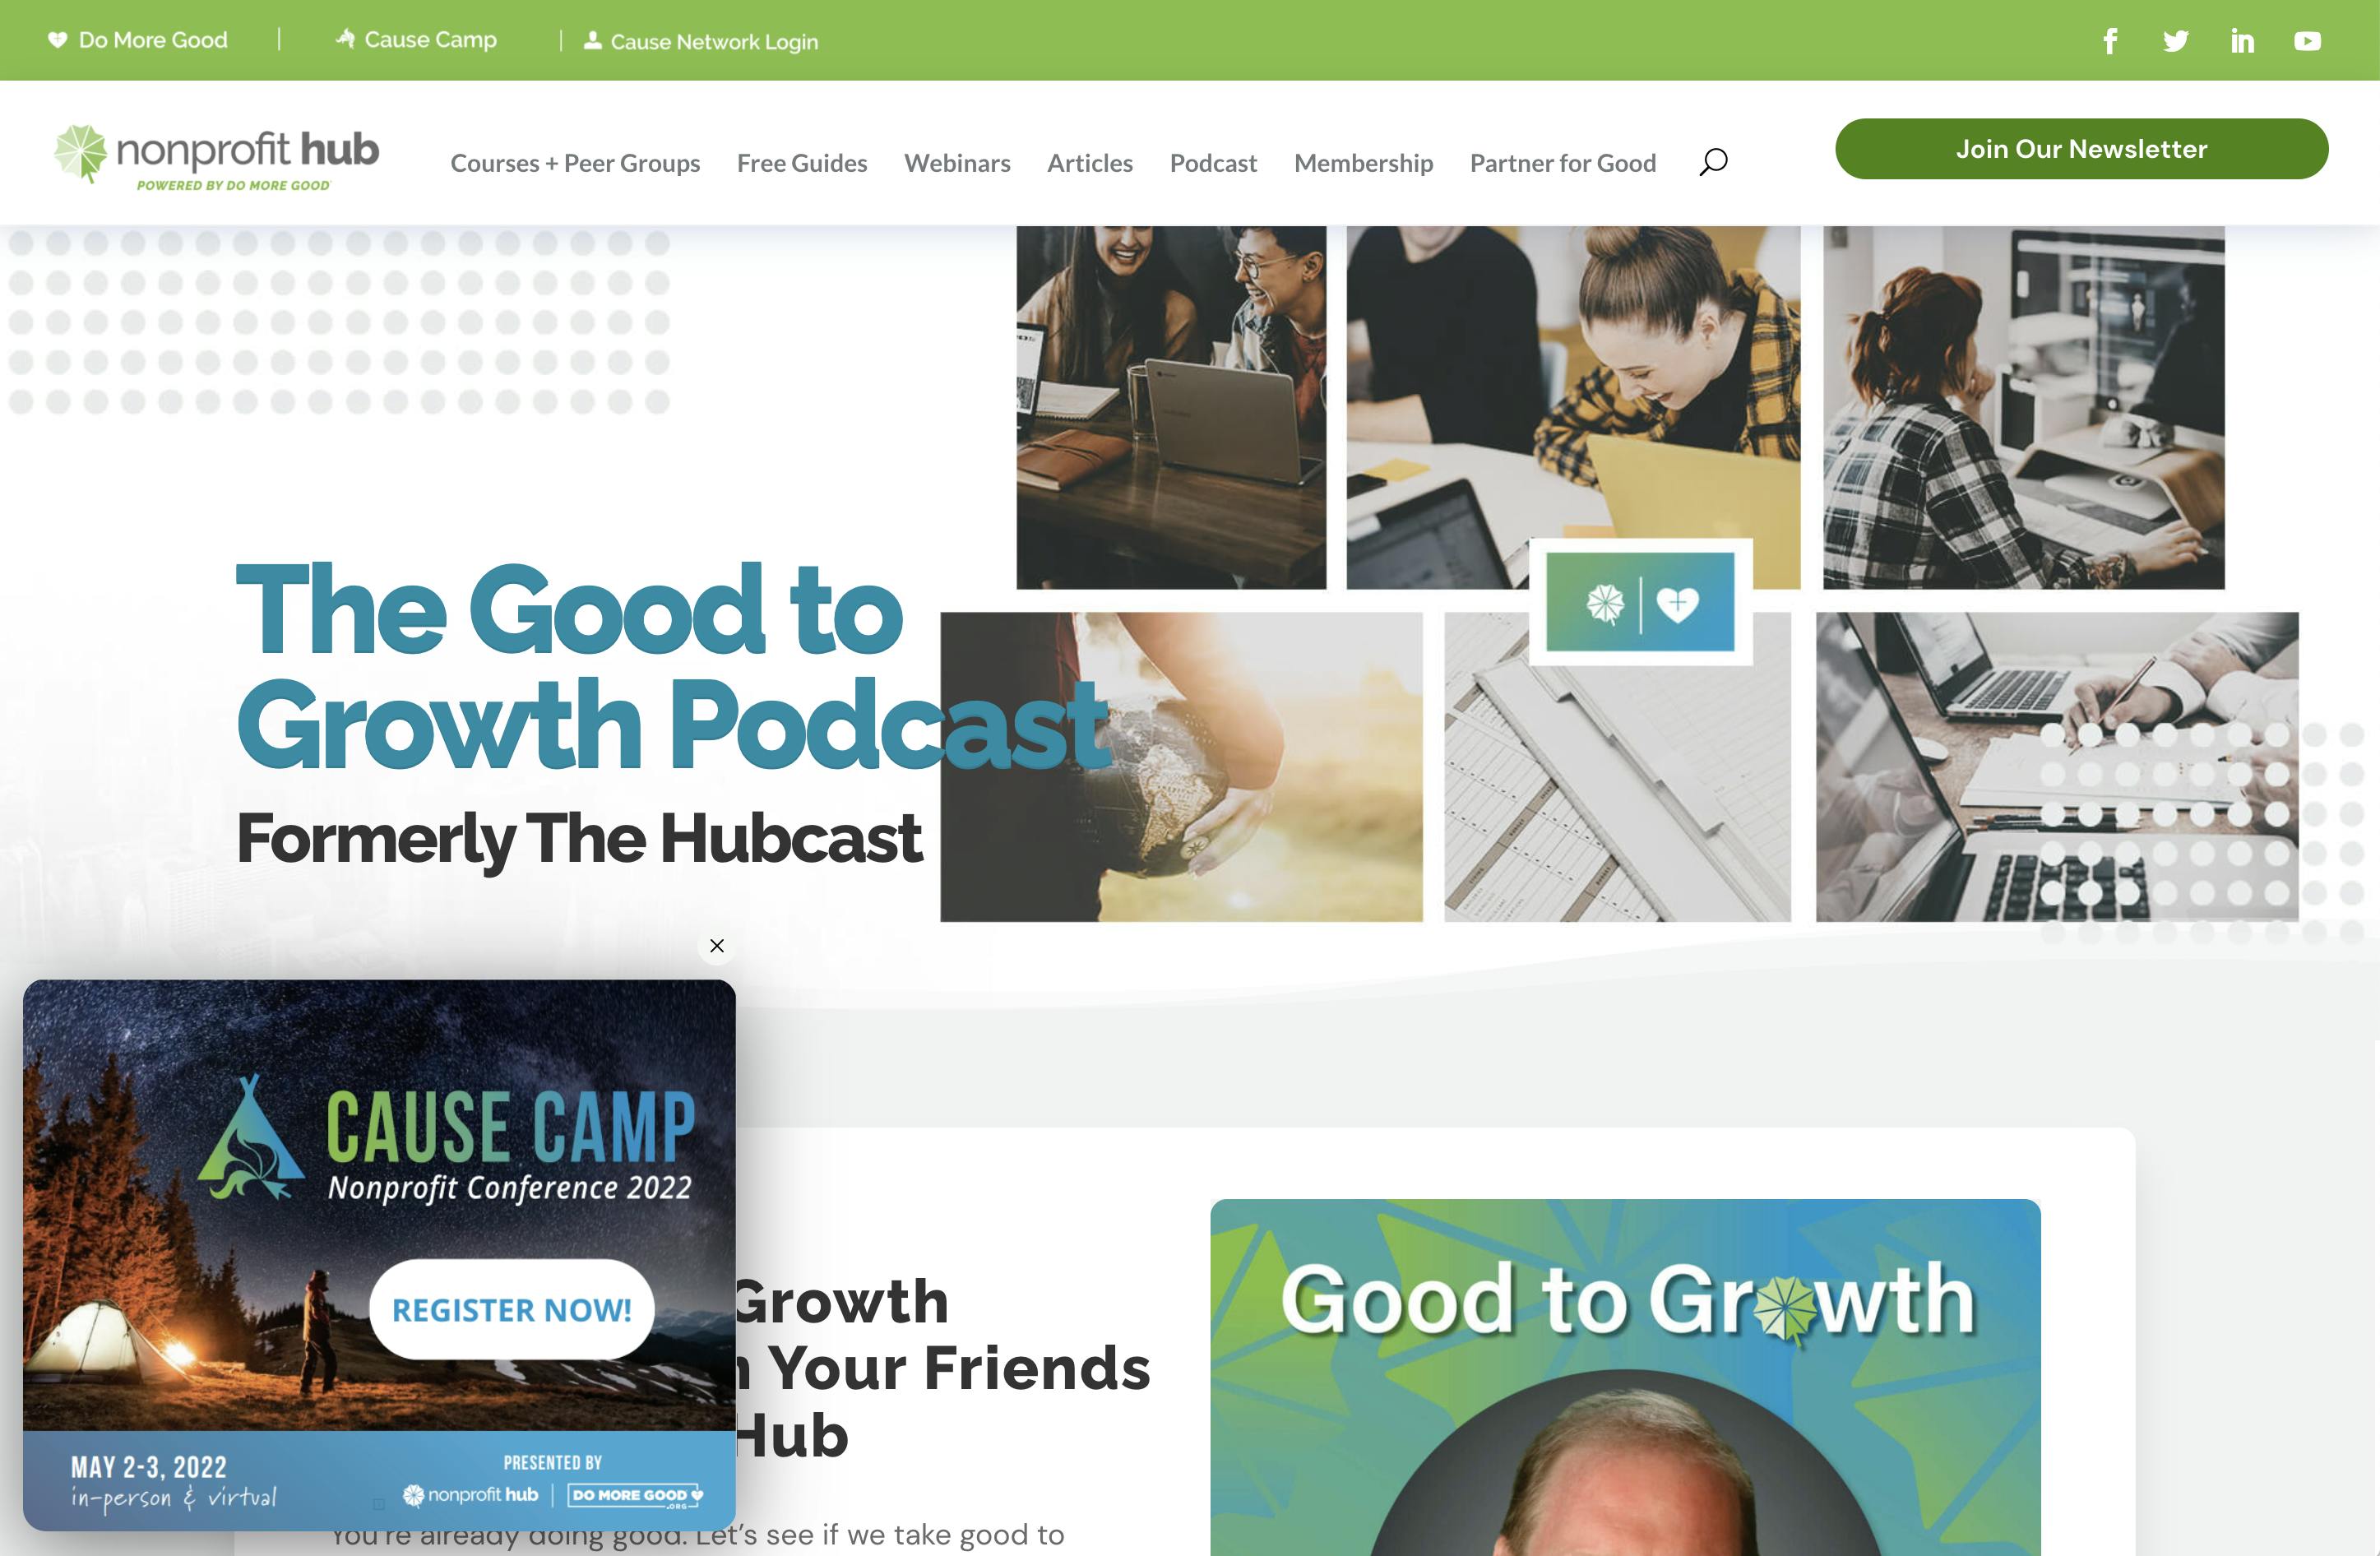 The Good Growth Podcast